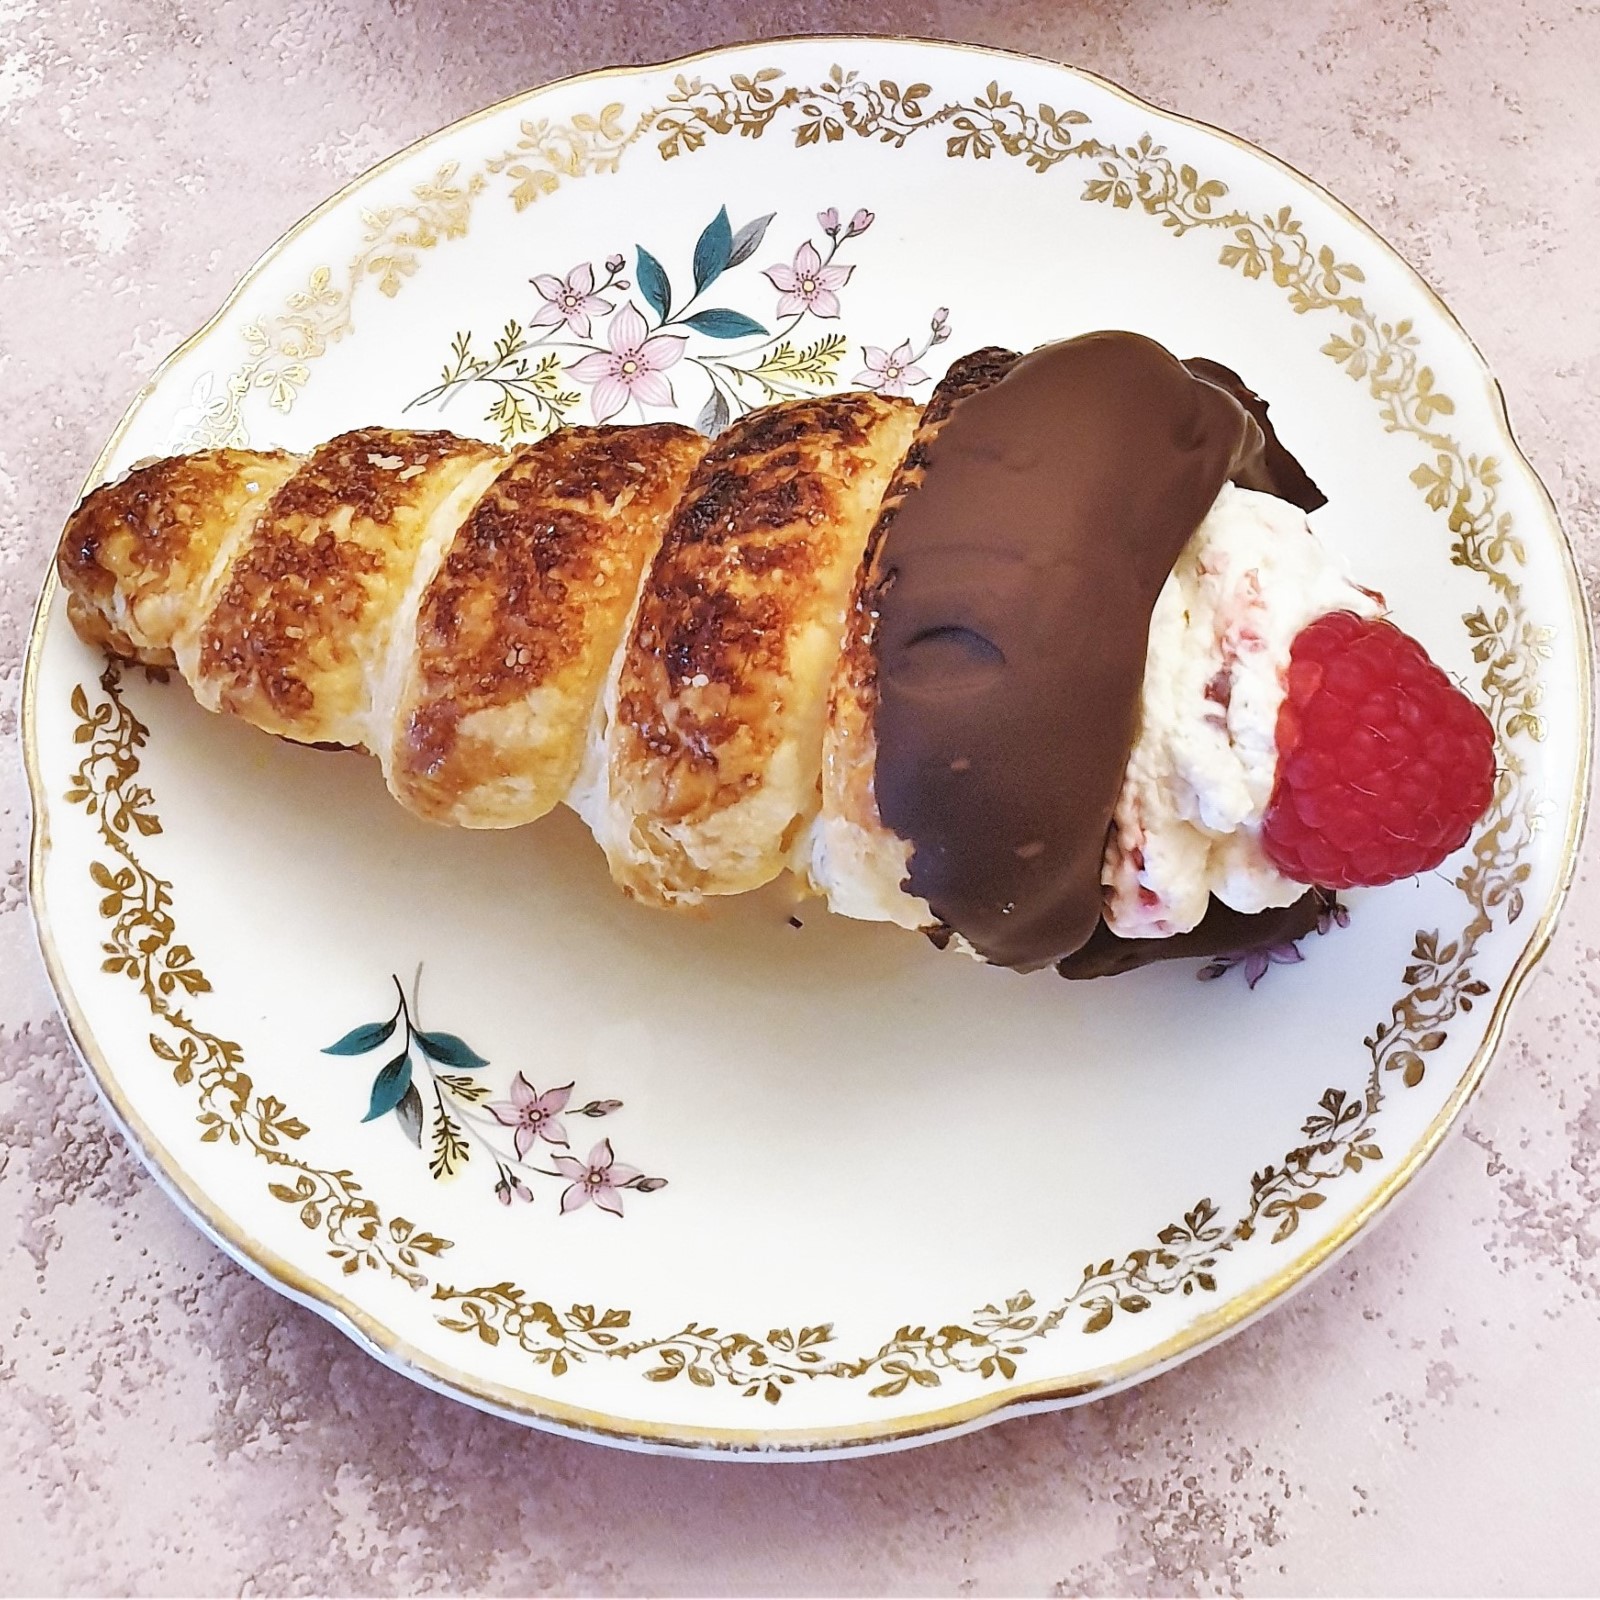 A chocolate-coated raspberry cream horn on a plate.